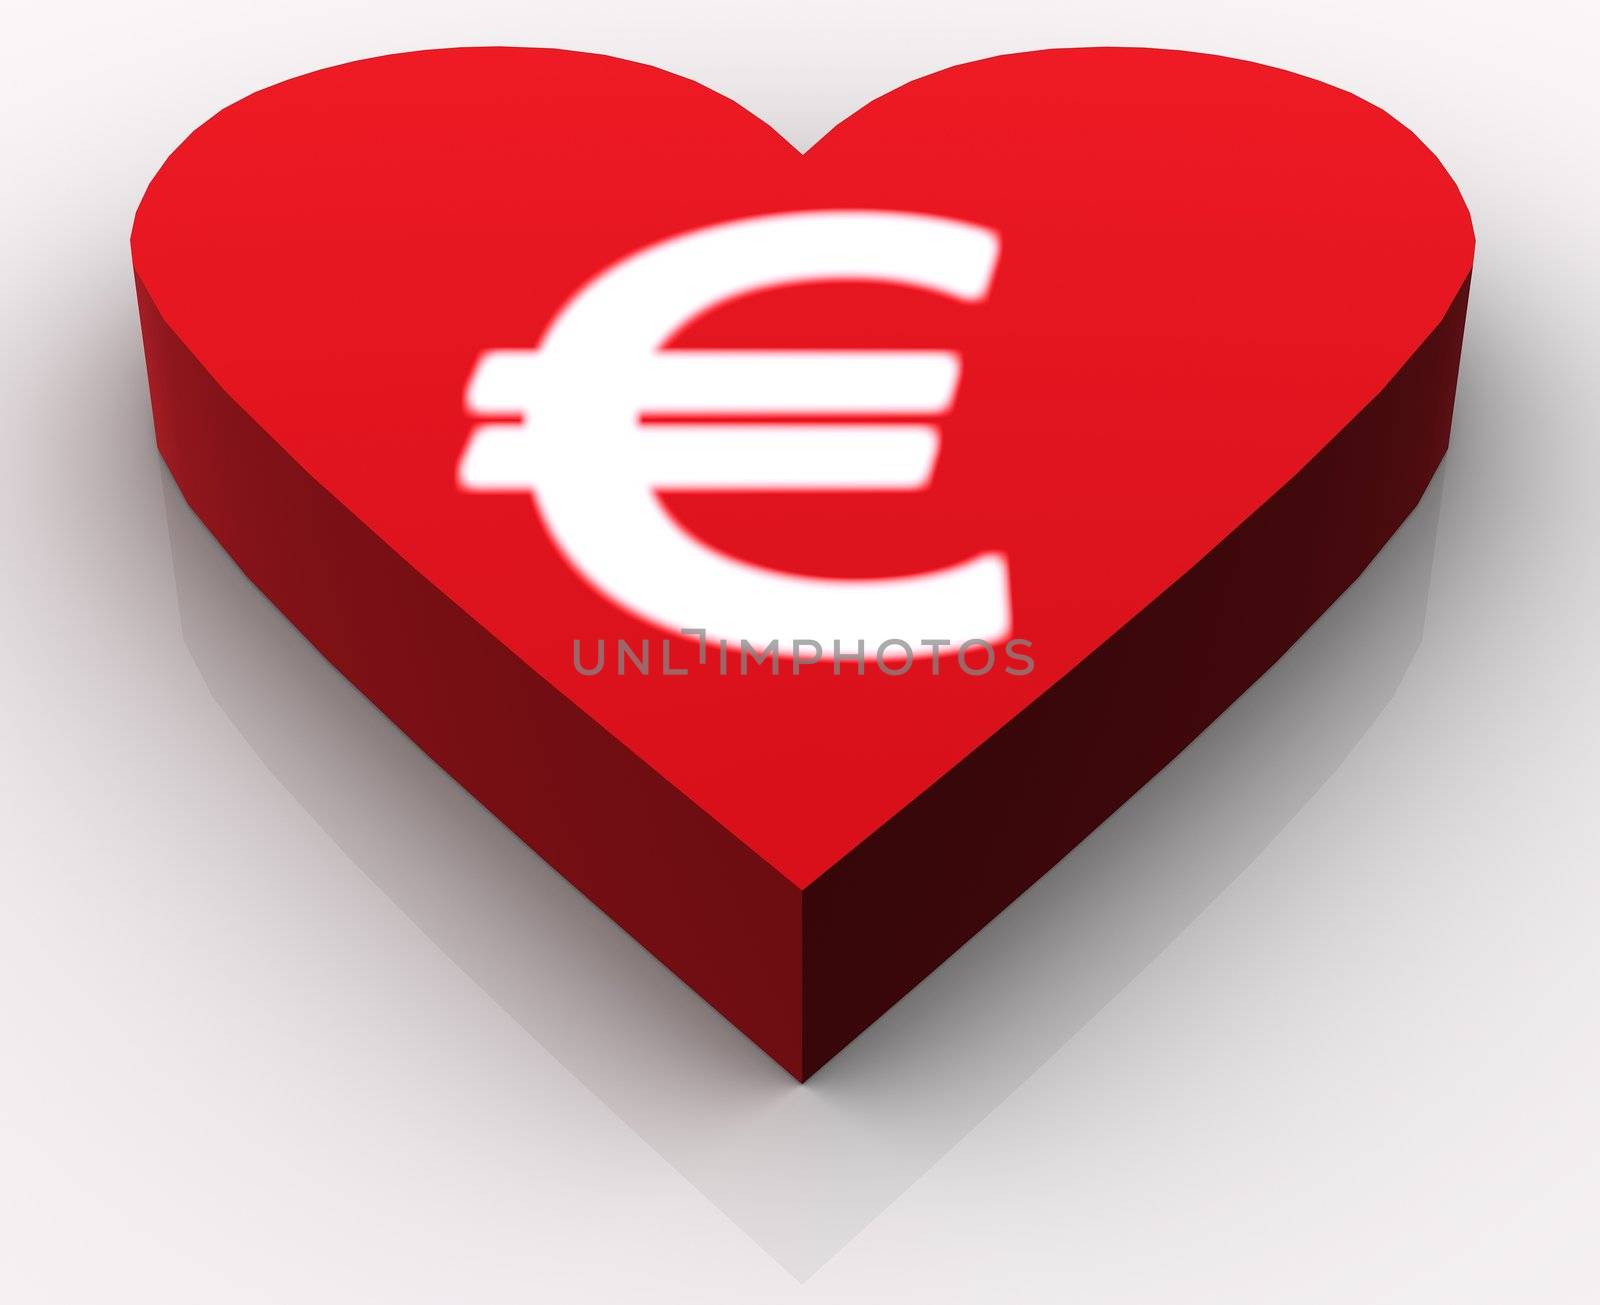 I love Euro by jareso